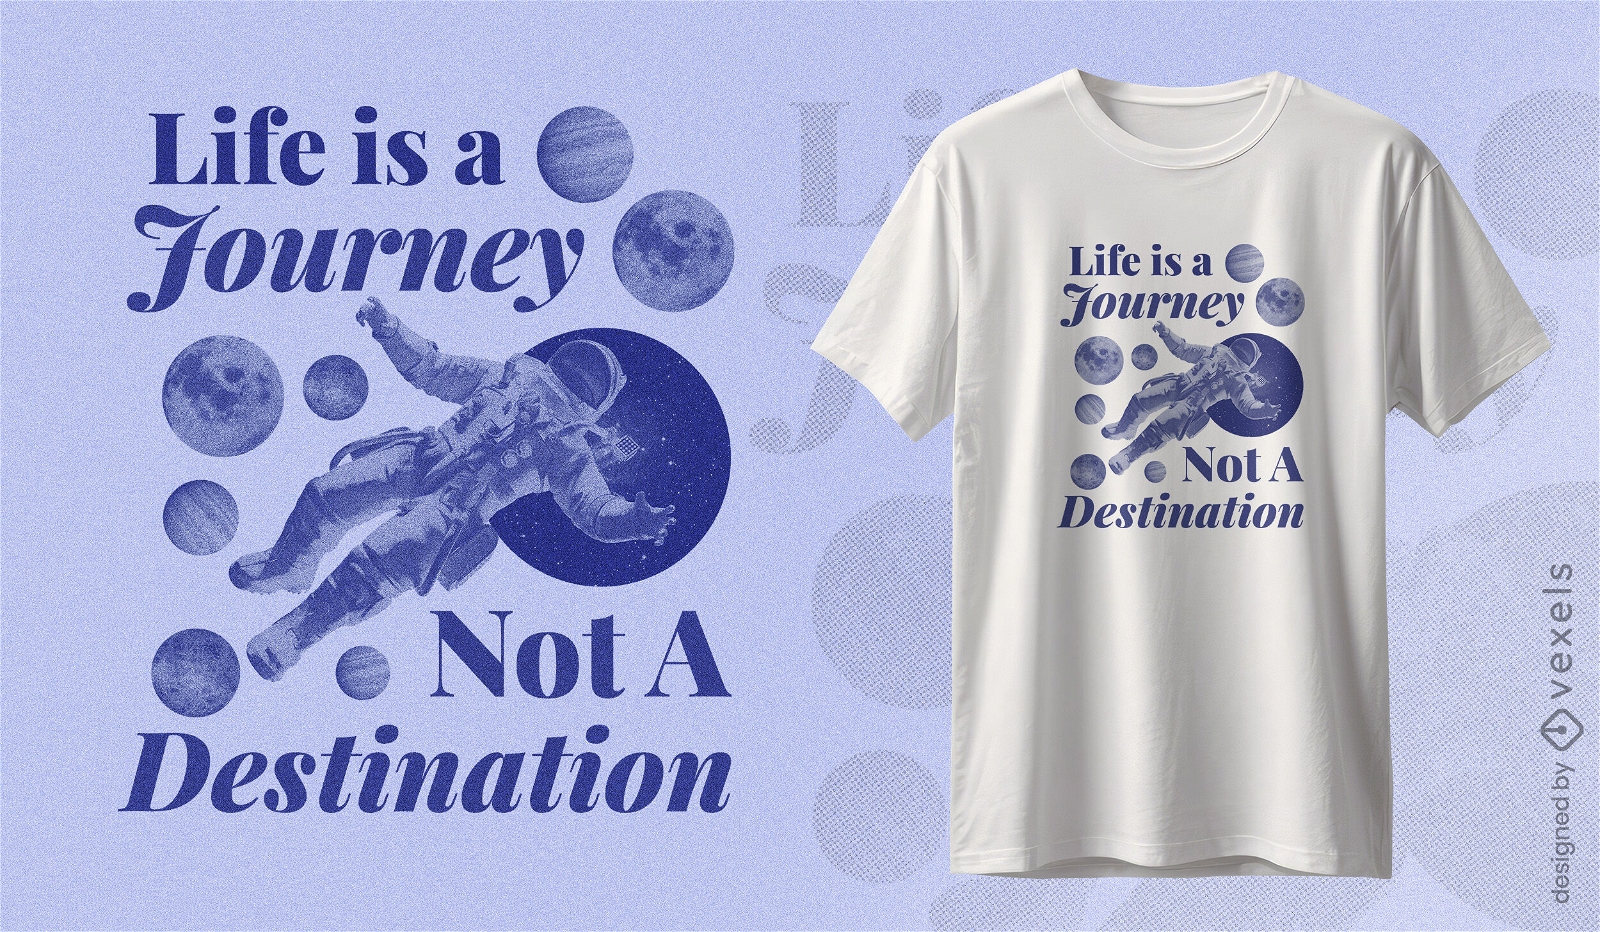 Life is a journey not a destination t-shirt design